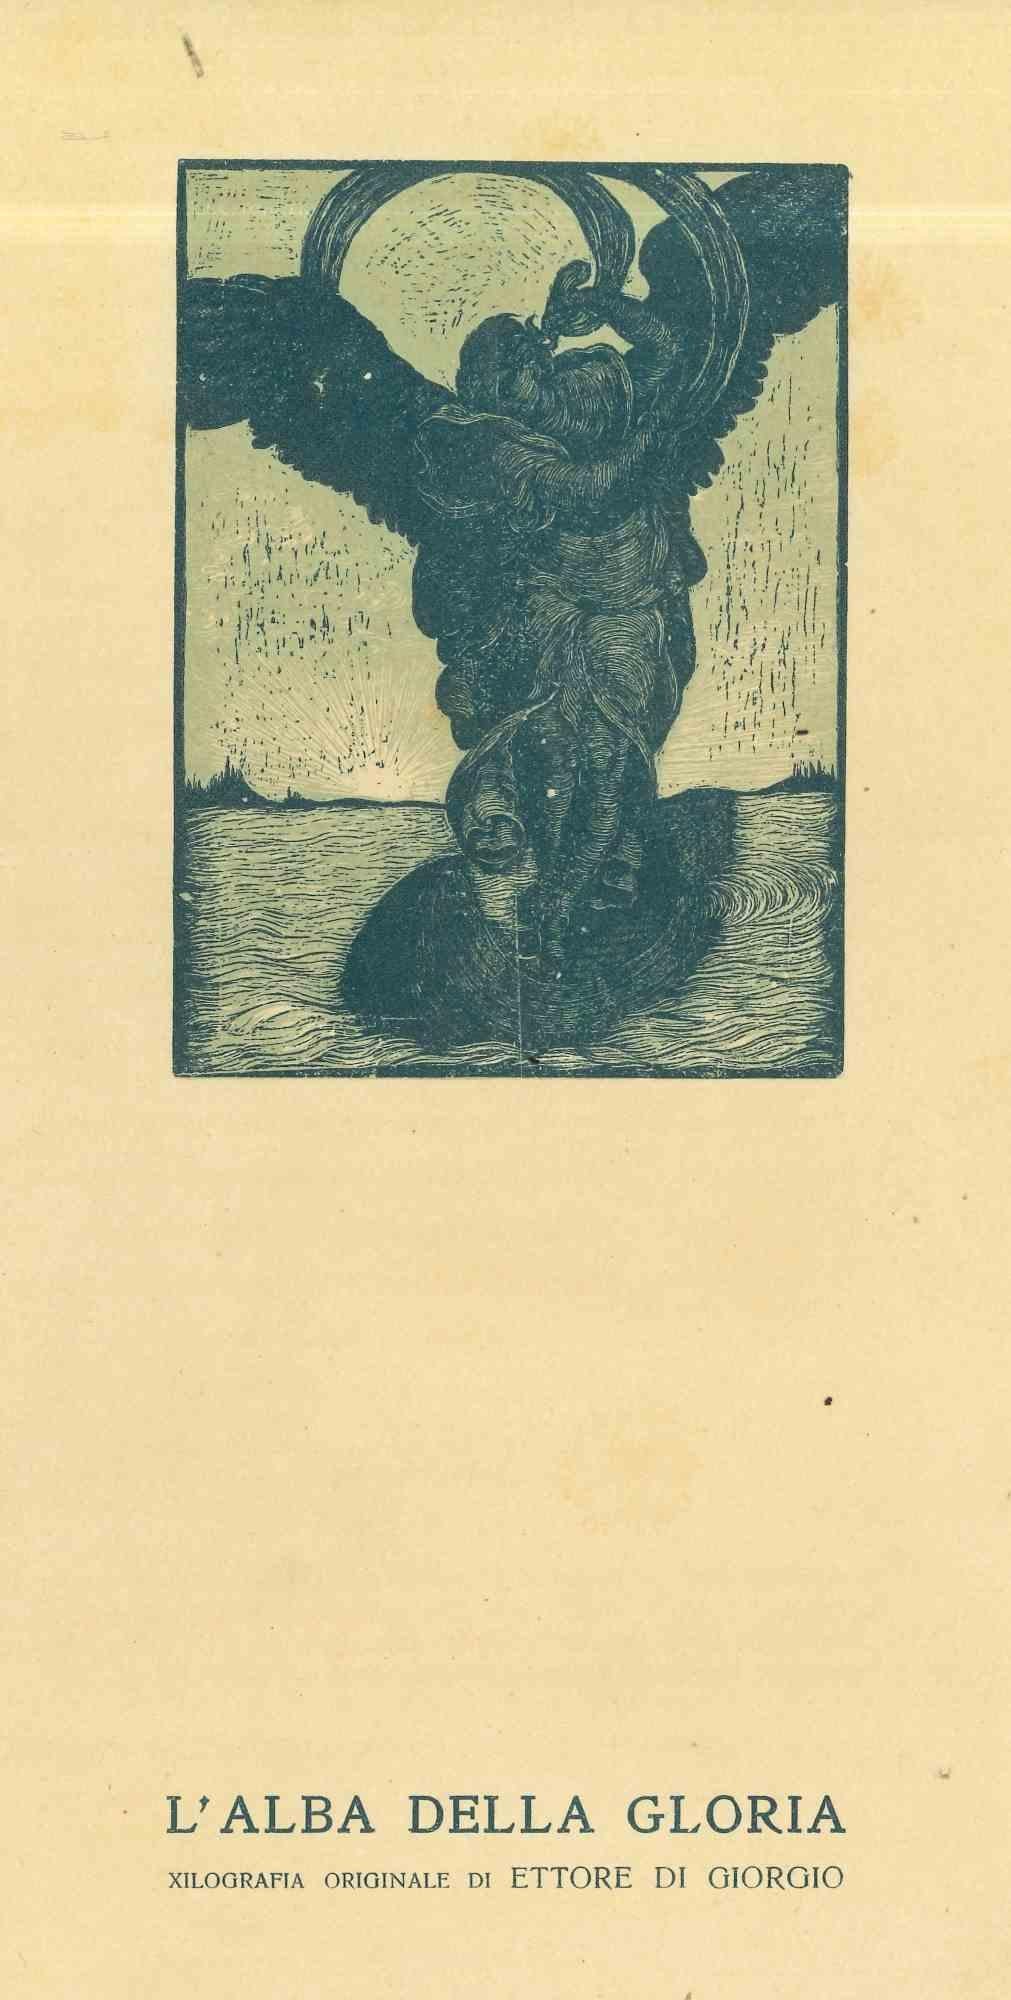 Unknown Figurative Print - Dawn of Glory - Woodcut by Ettore di Giorgio - Early 20th Century